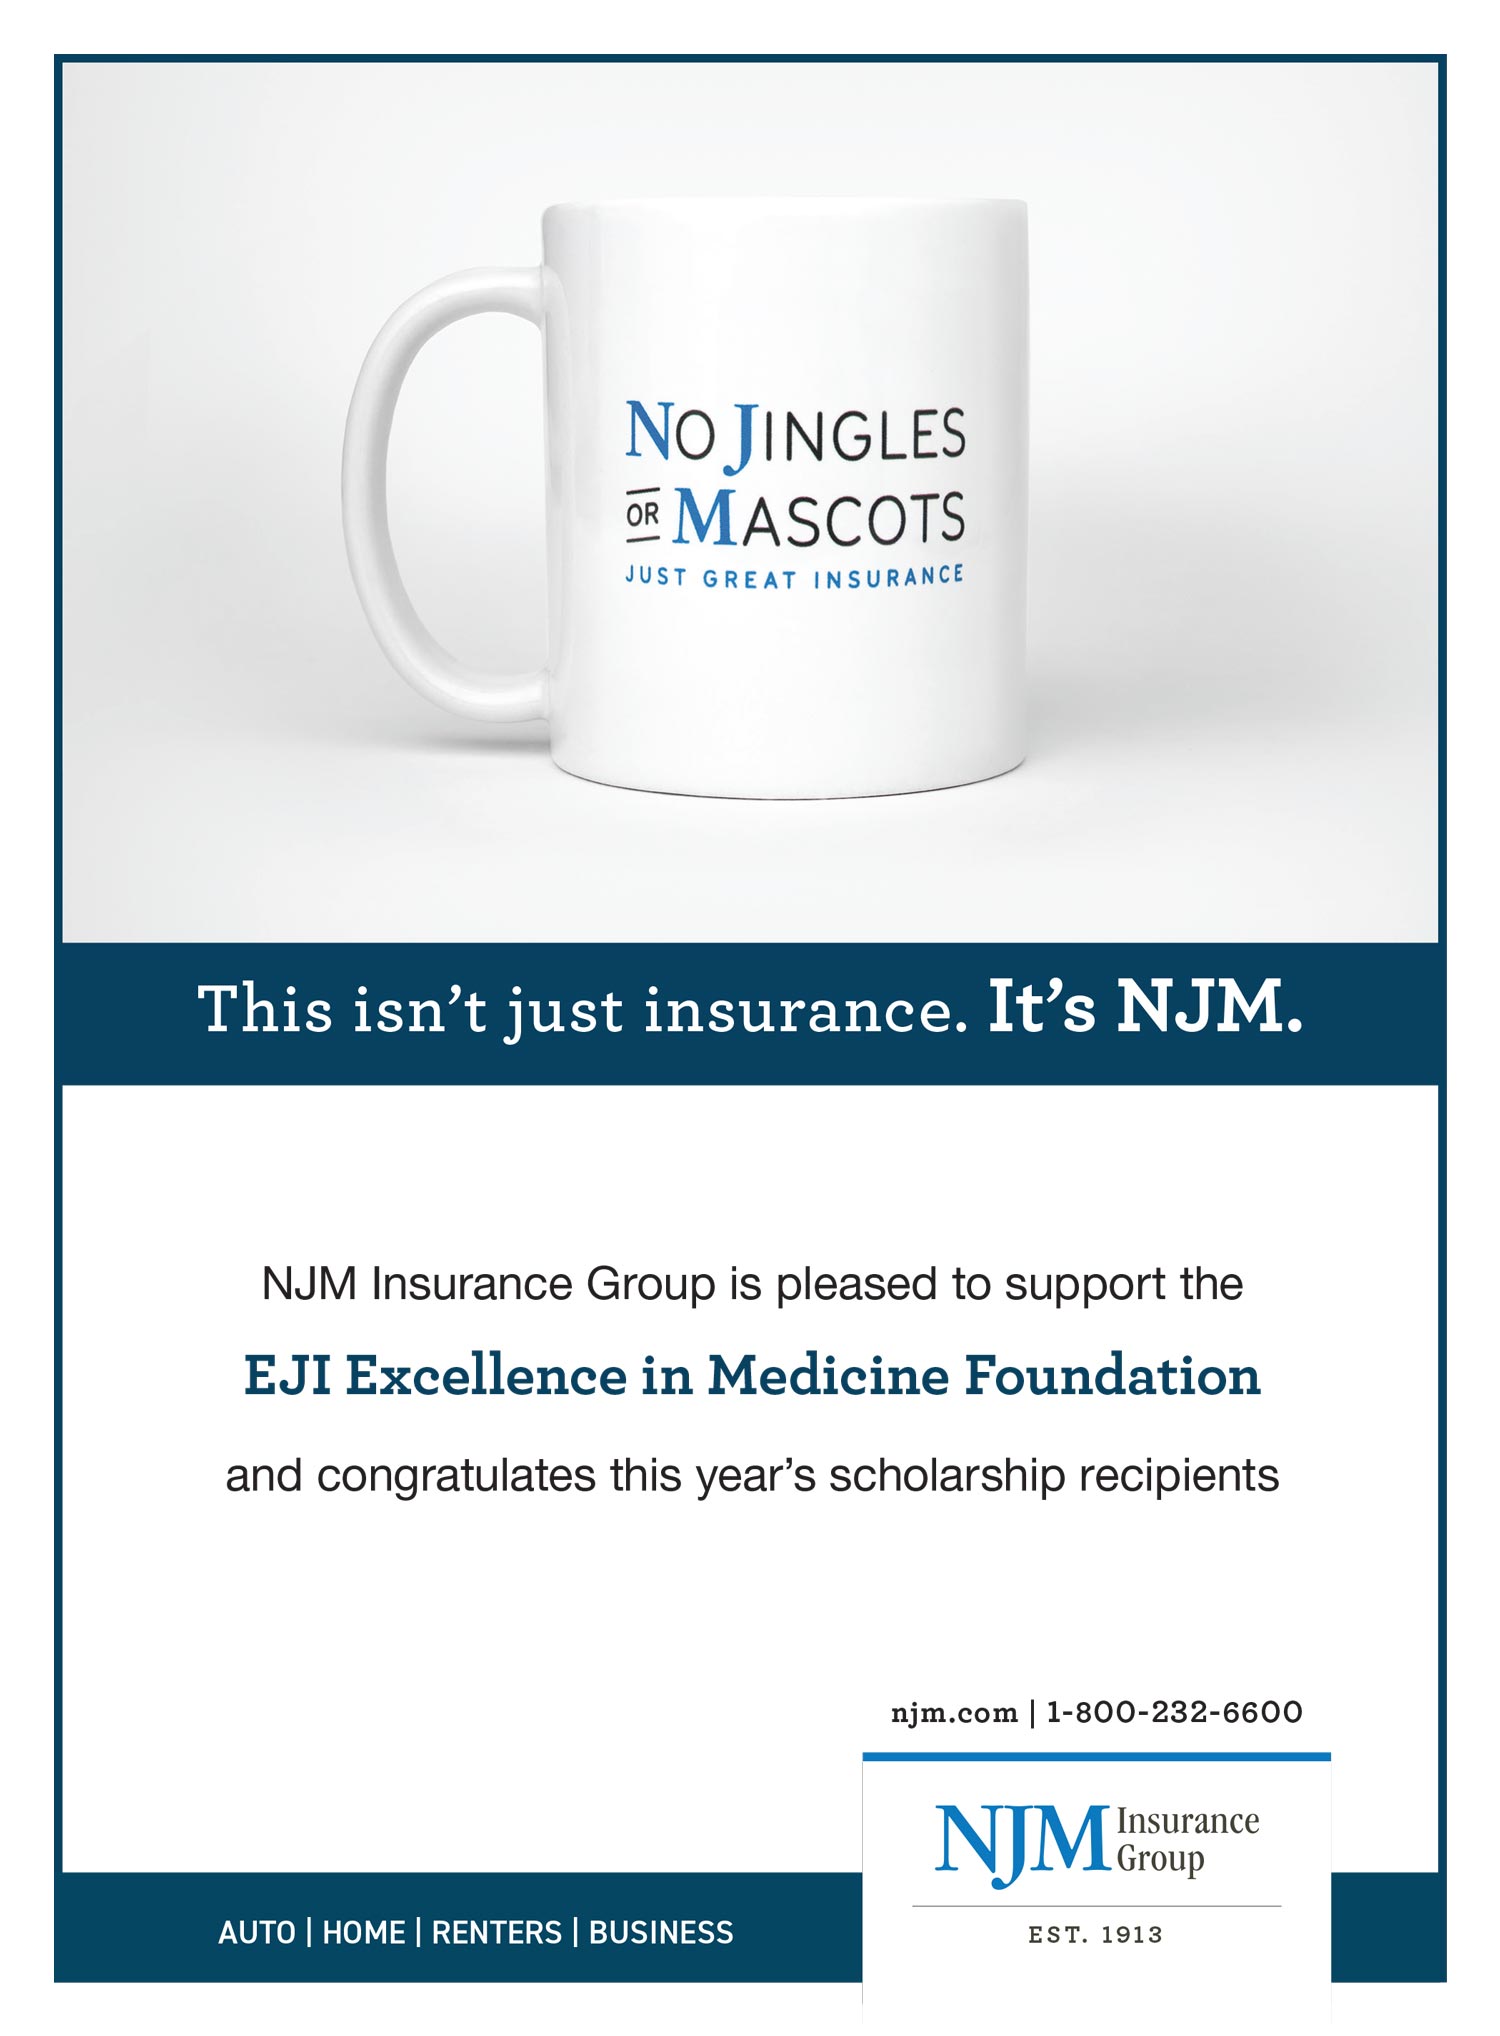 NJM Insurance Group advertisement